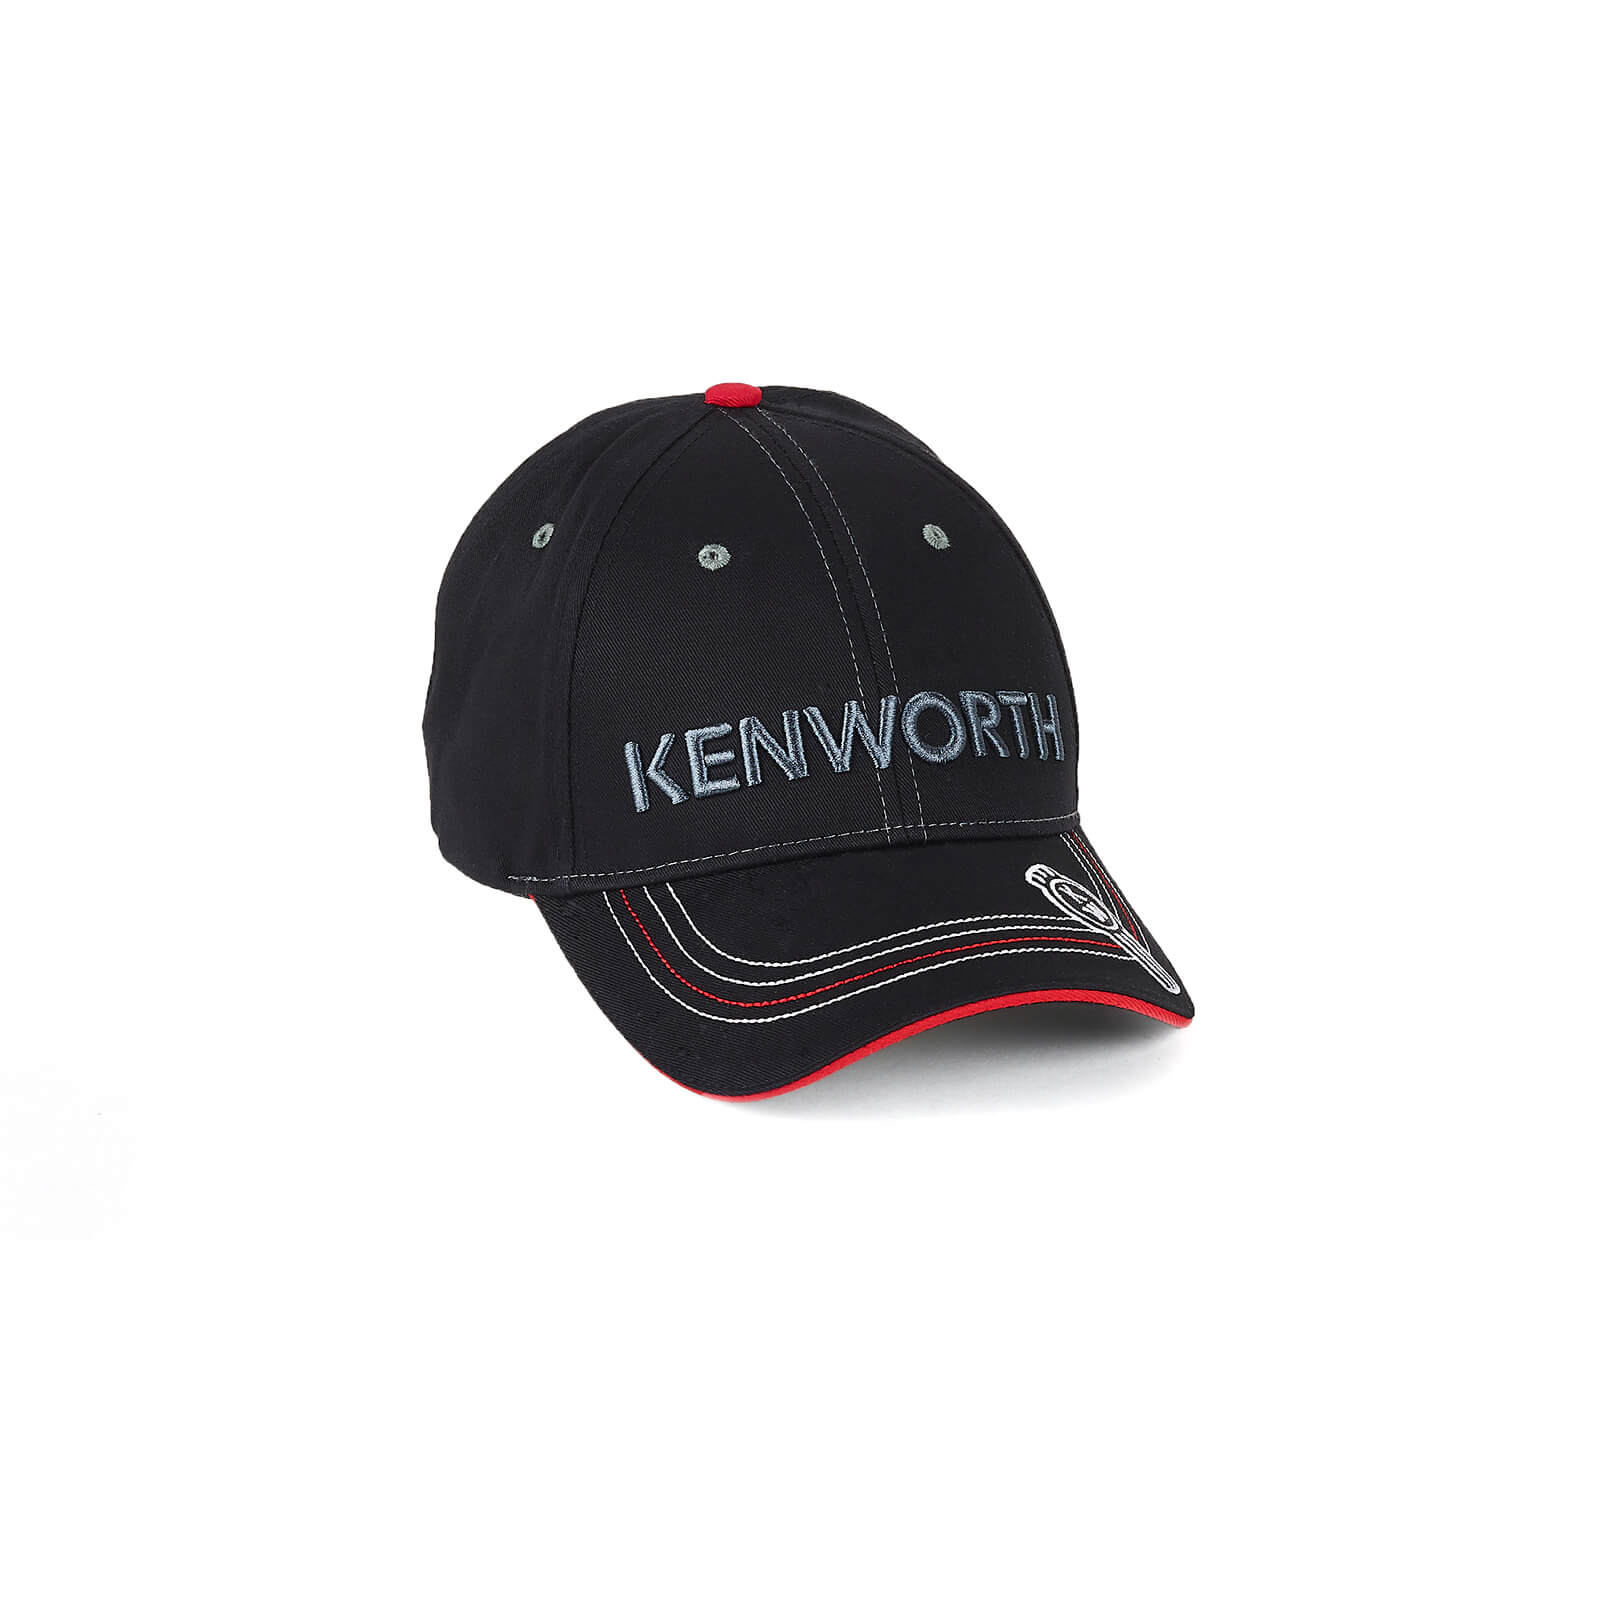 Kenworth Montreal cap